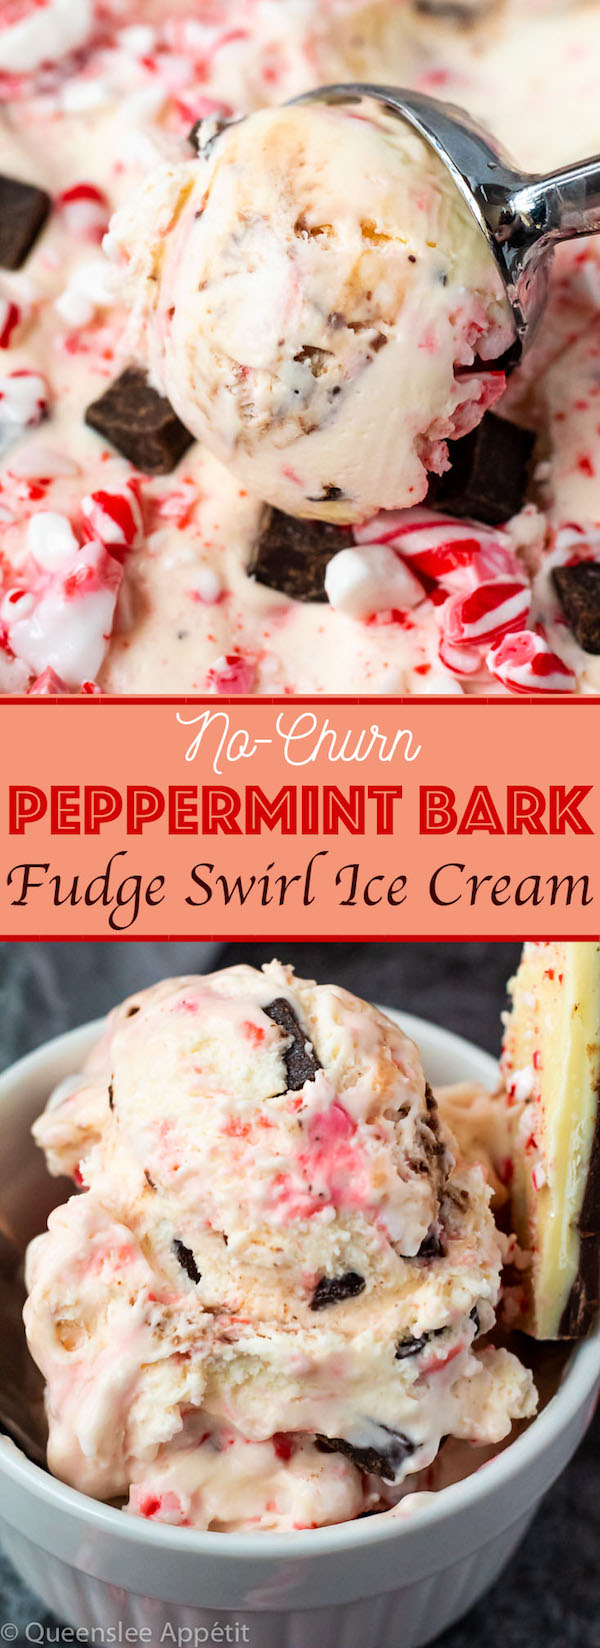 No-Churn Peppermint Bark Fudge Swirl Ice Cream